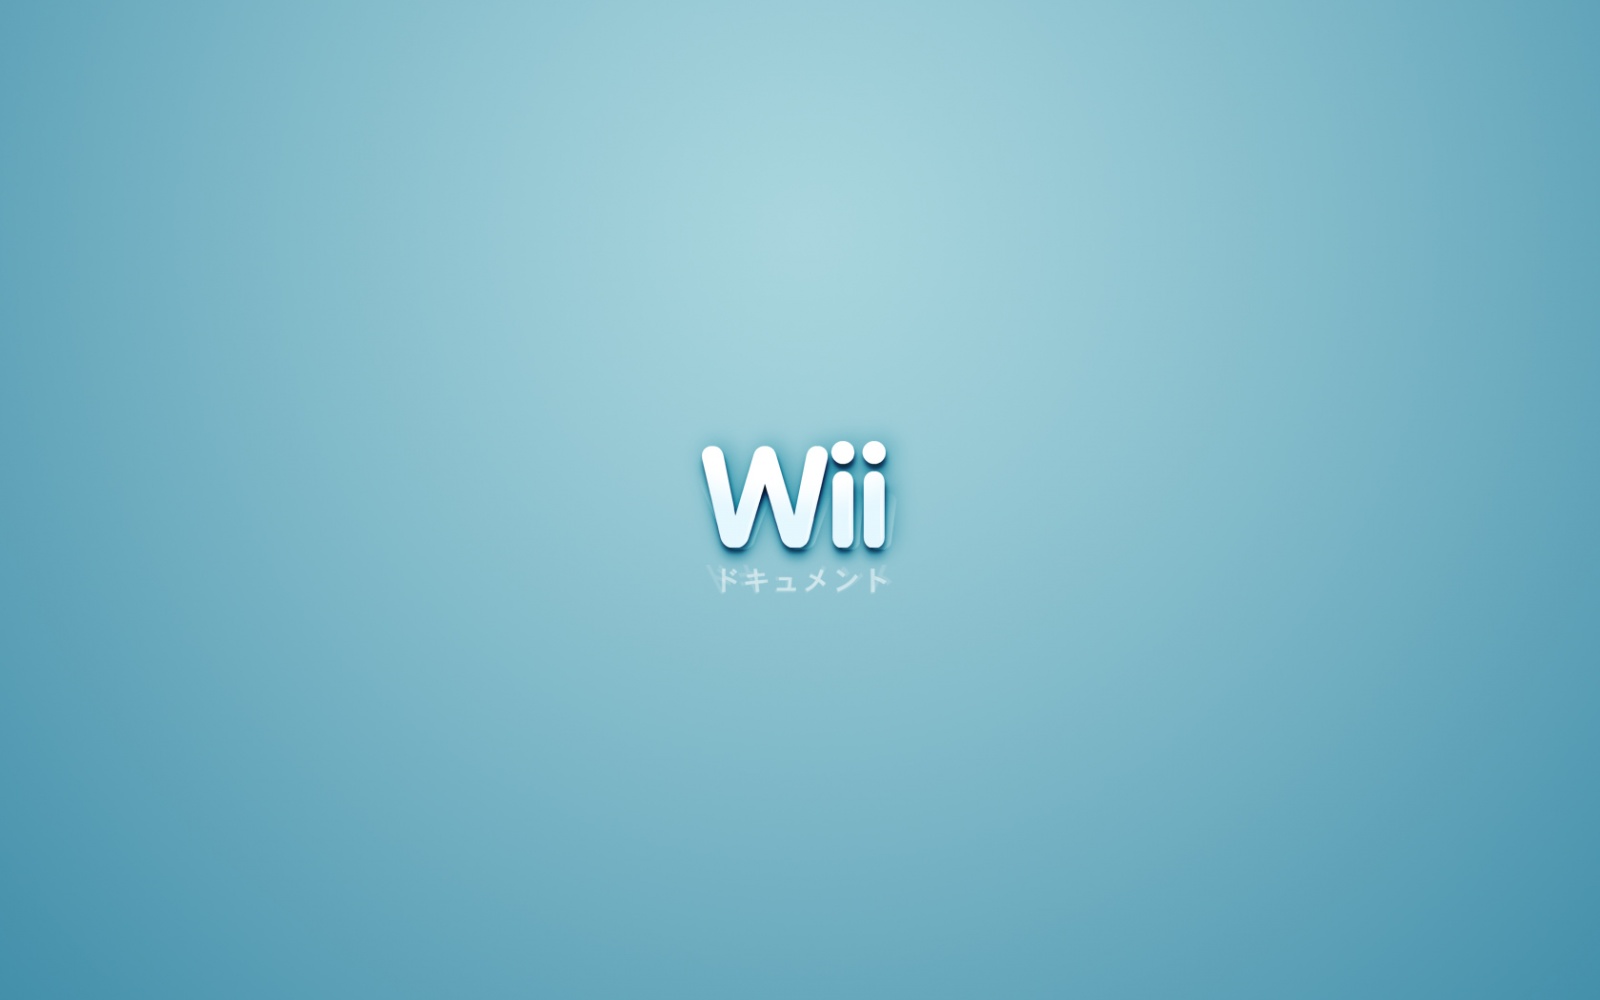 Wii Wallpaper Stock Photos